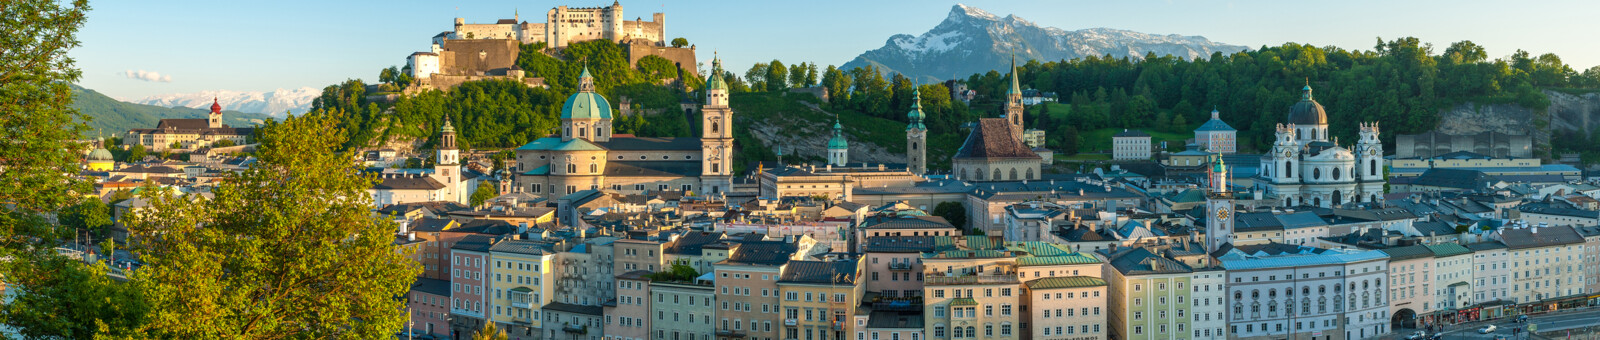     city of Salzburg 